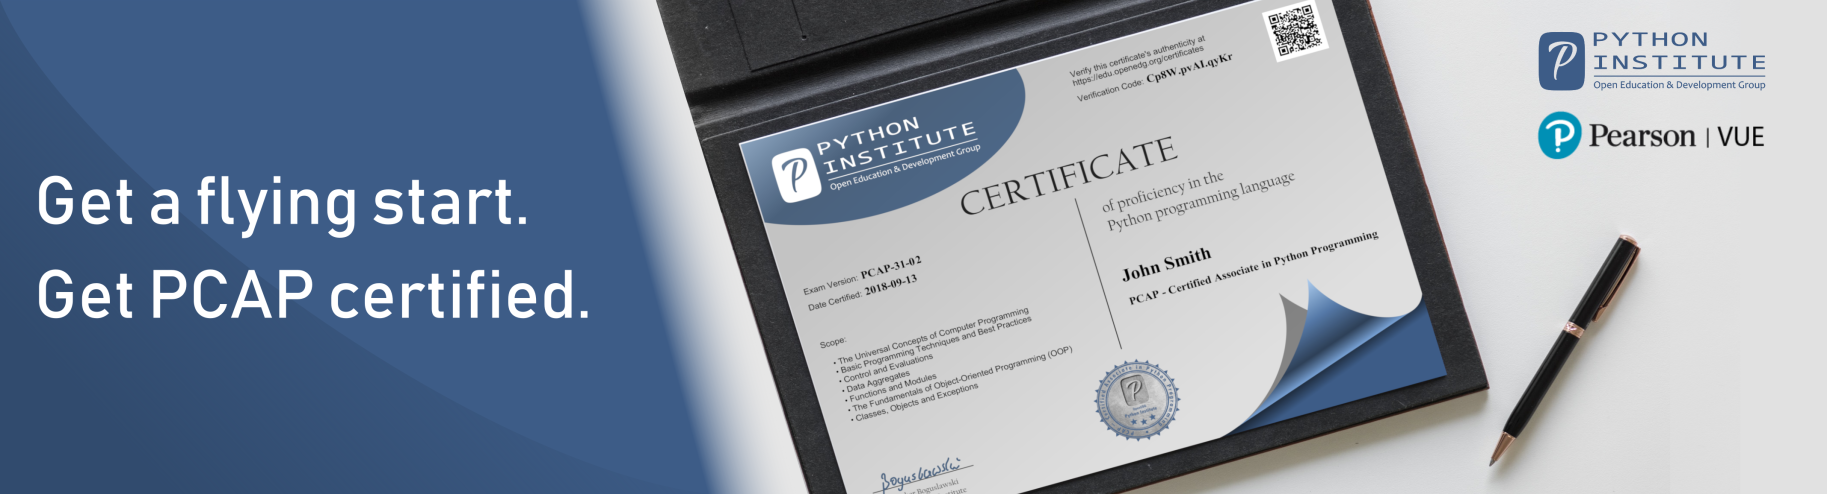 certified entry level python programmer certification